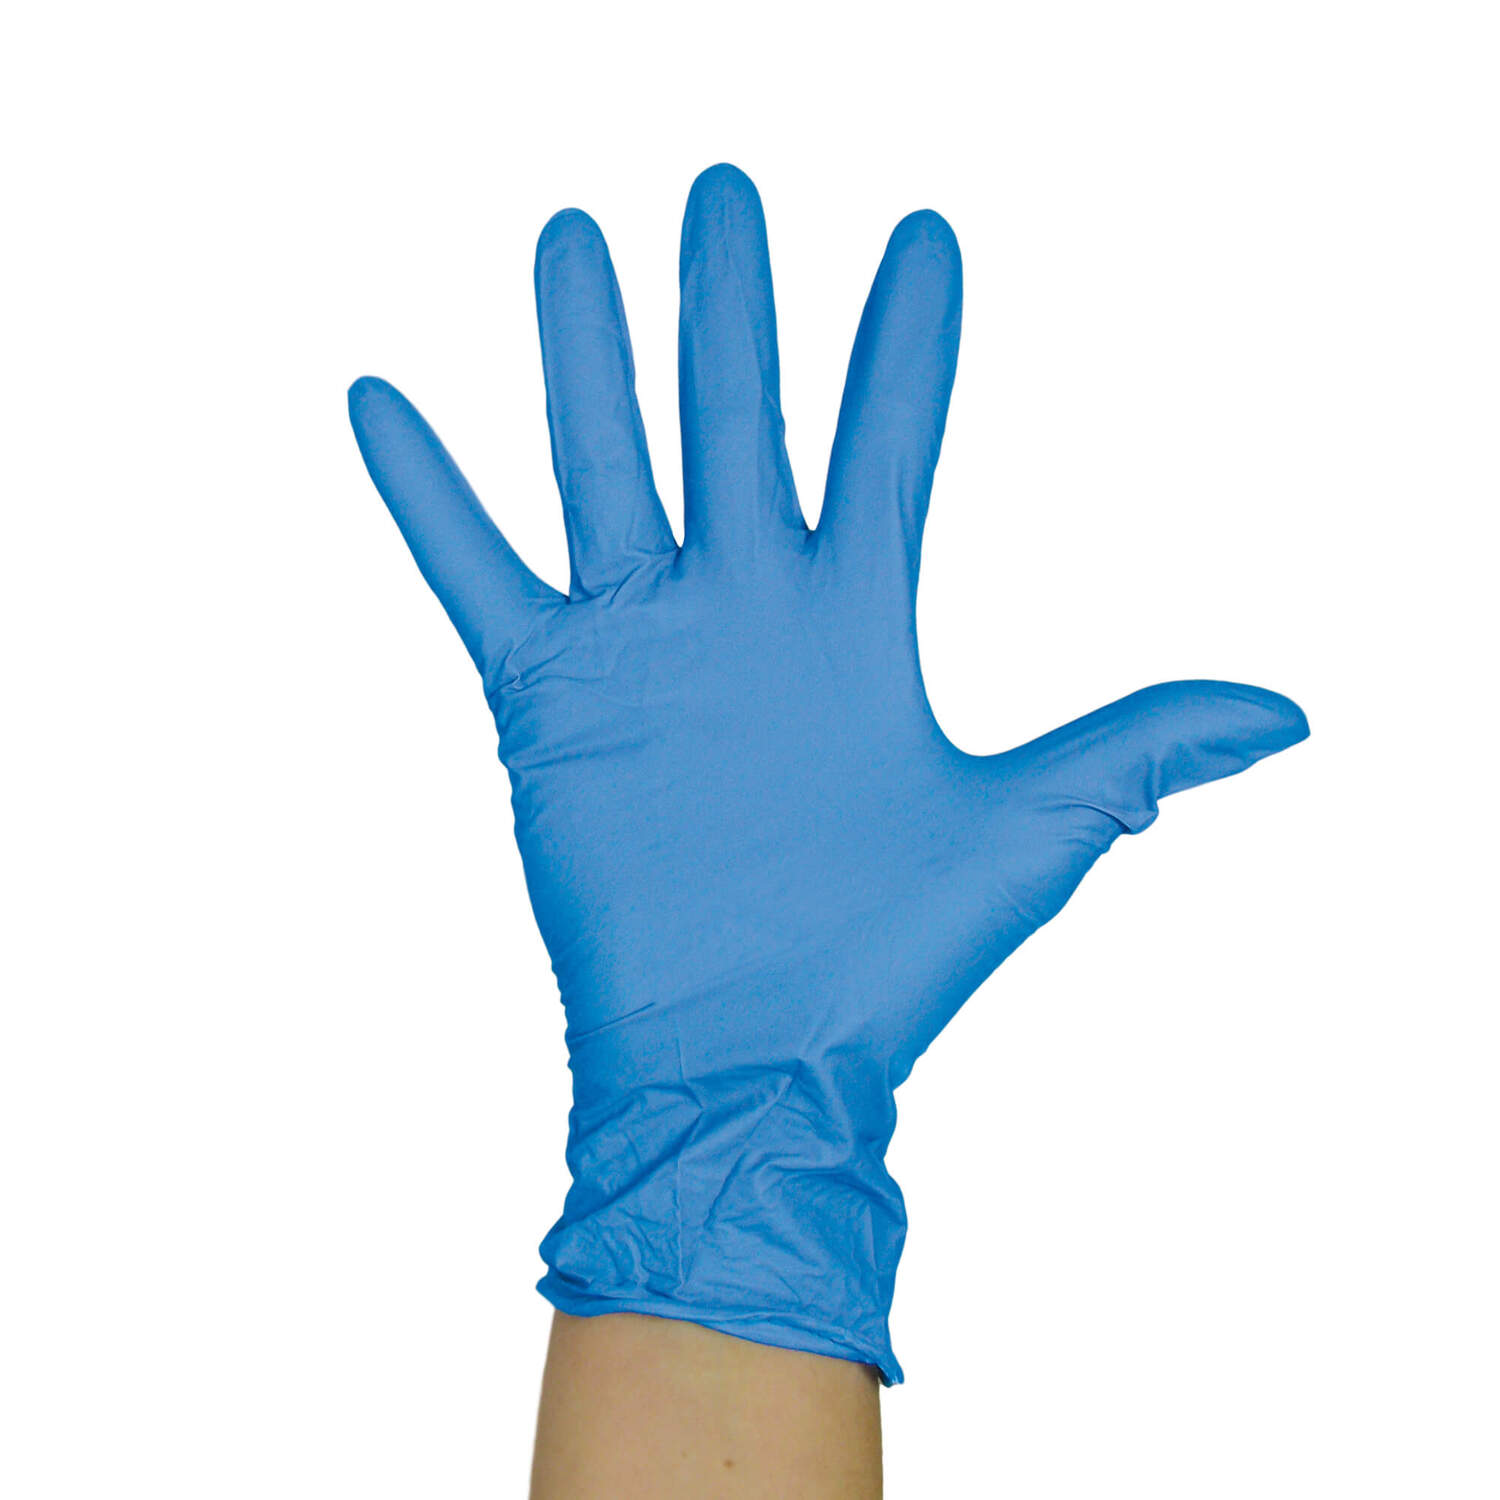 vinyl medical gloves